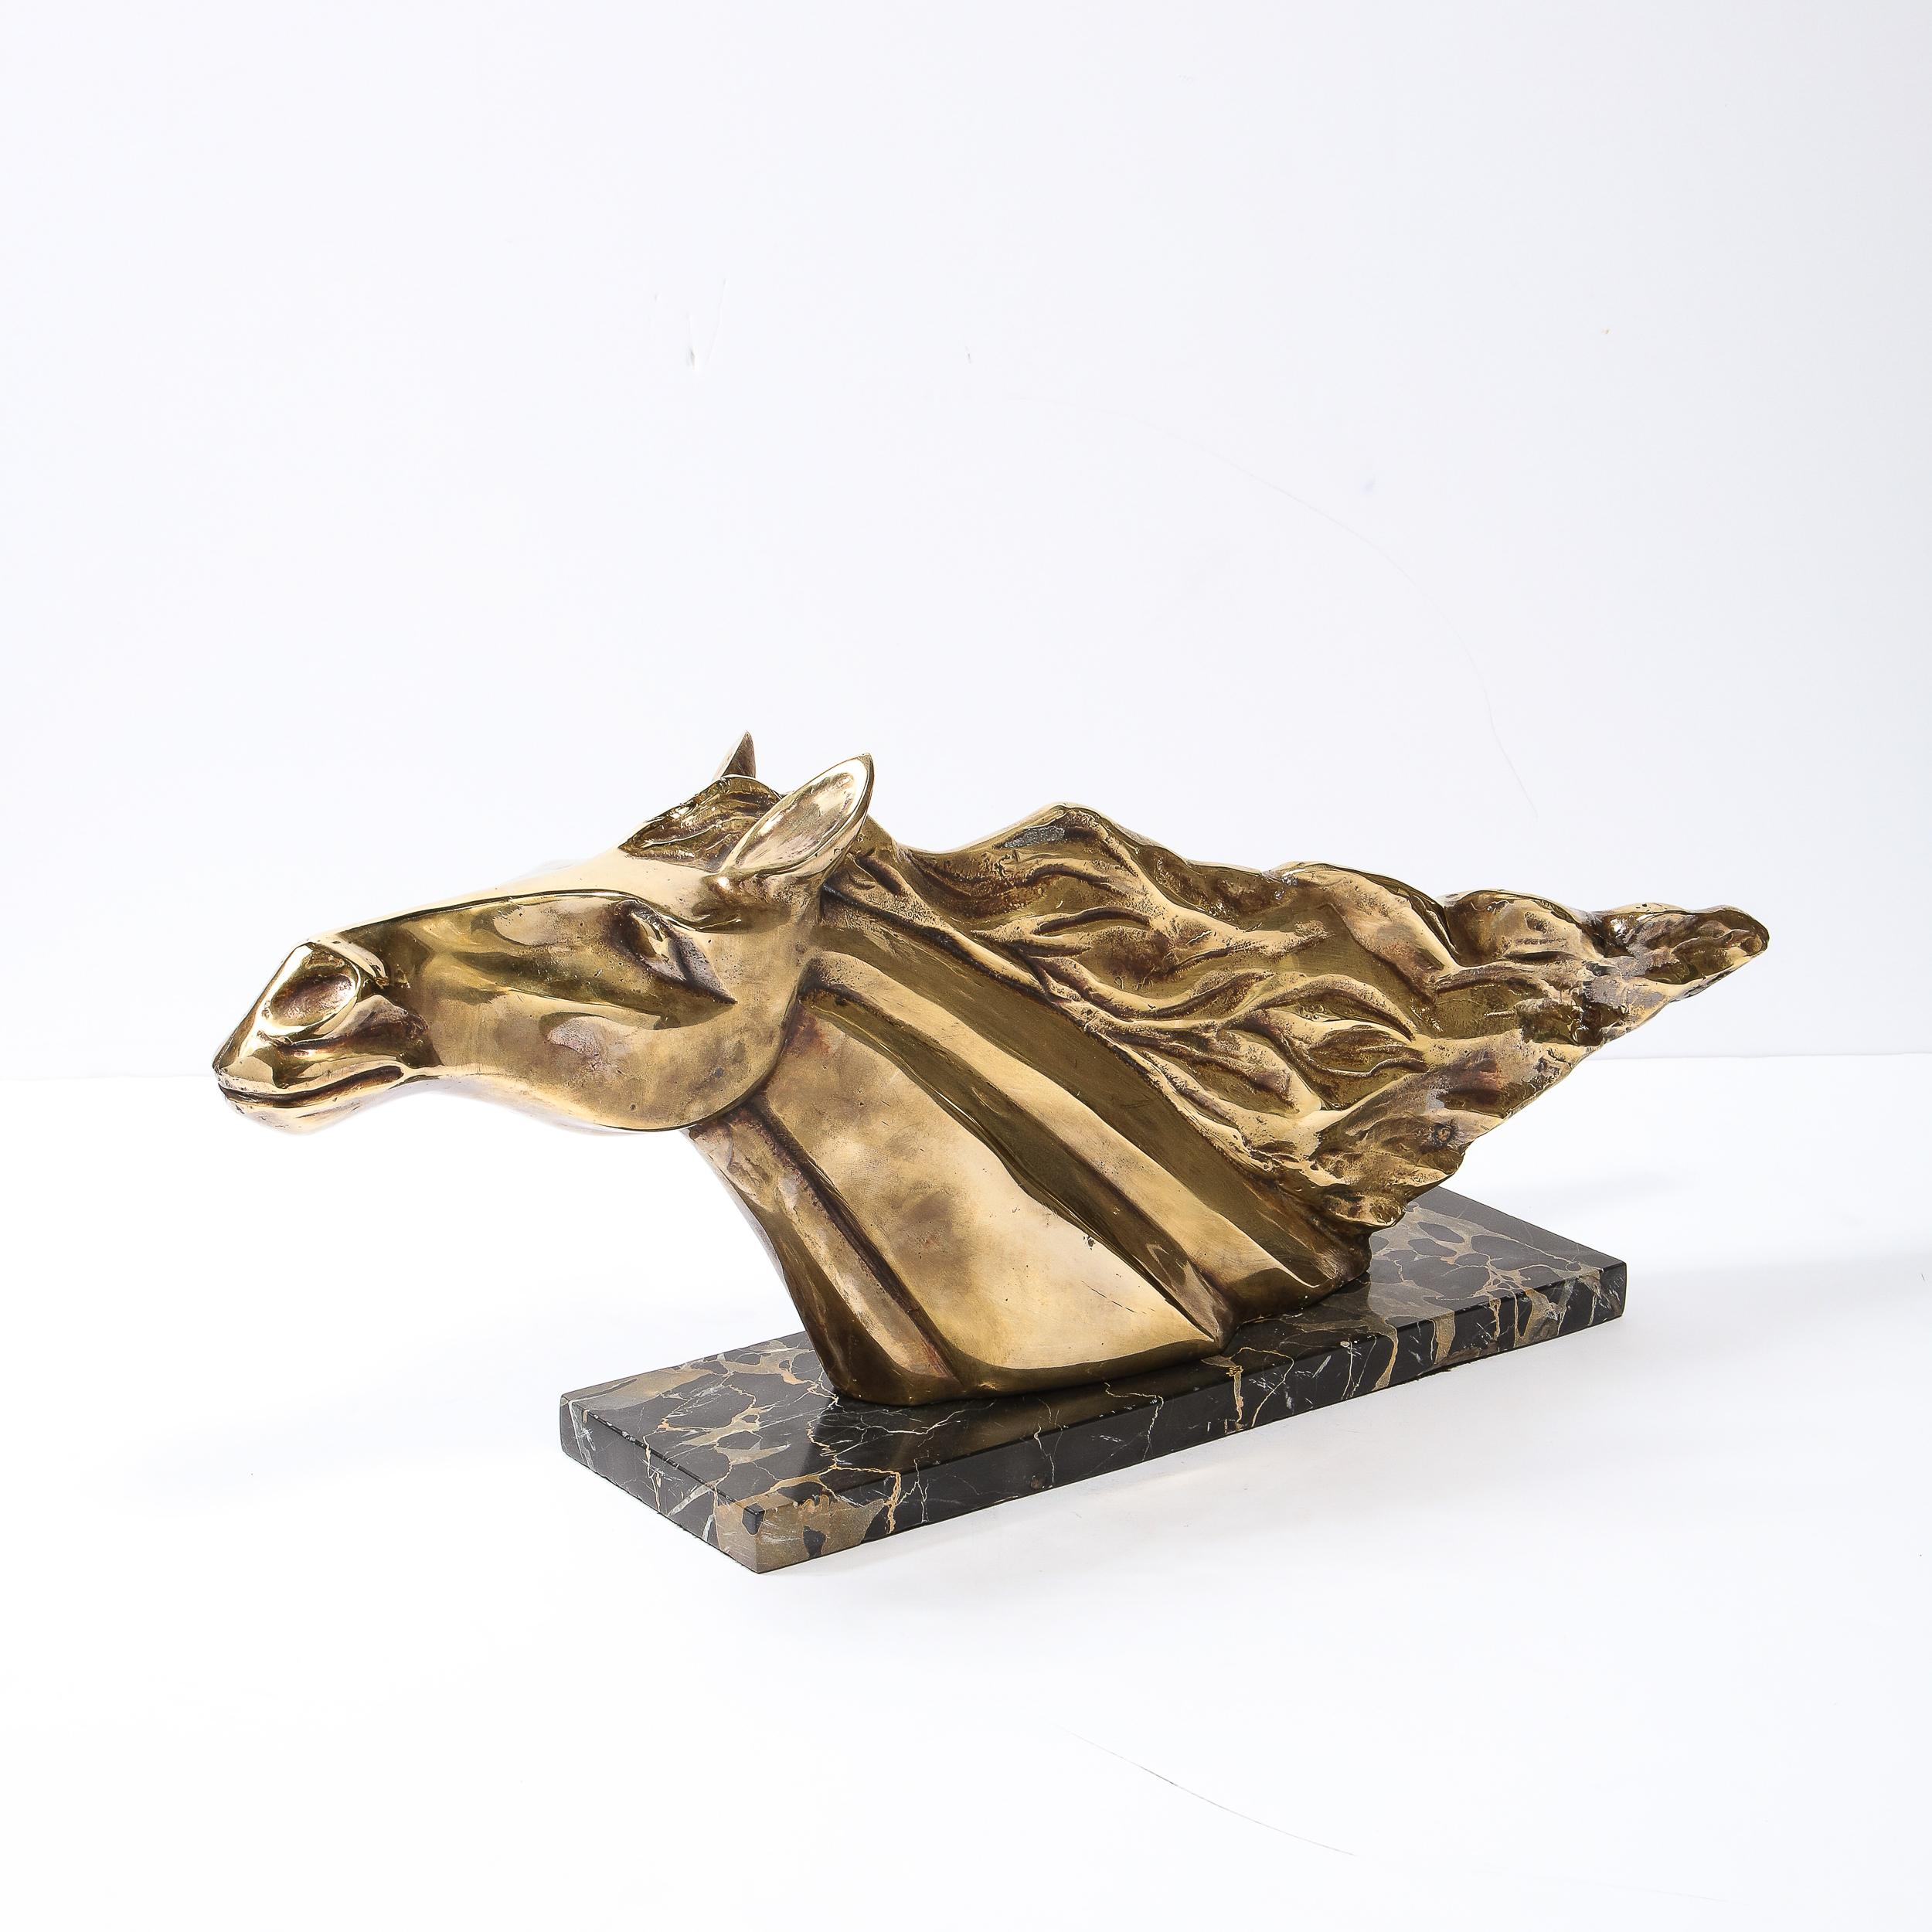 French Art Deco Stylized Stallion Sculpture in Brass on Black Portoro Marble Base